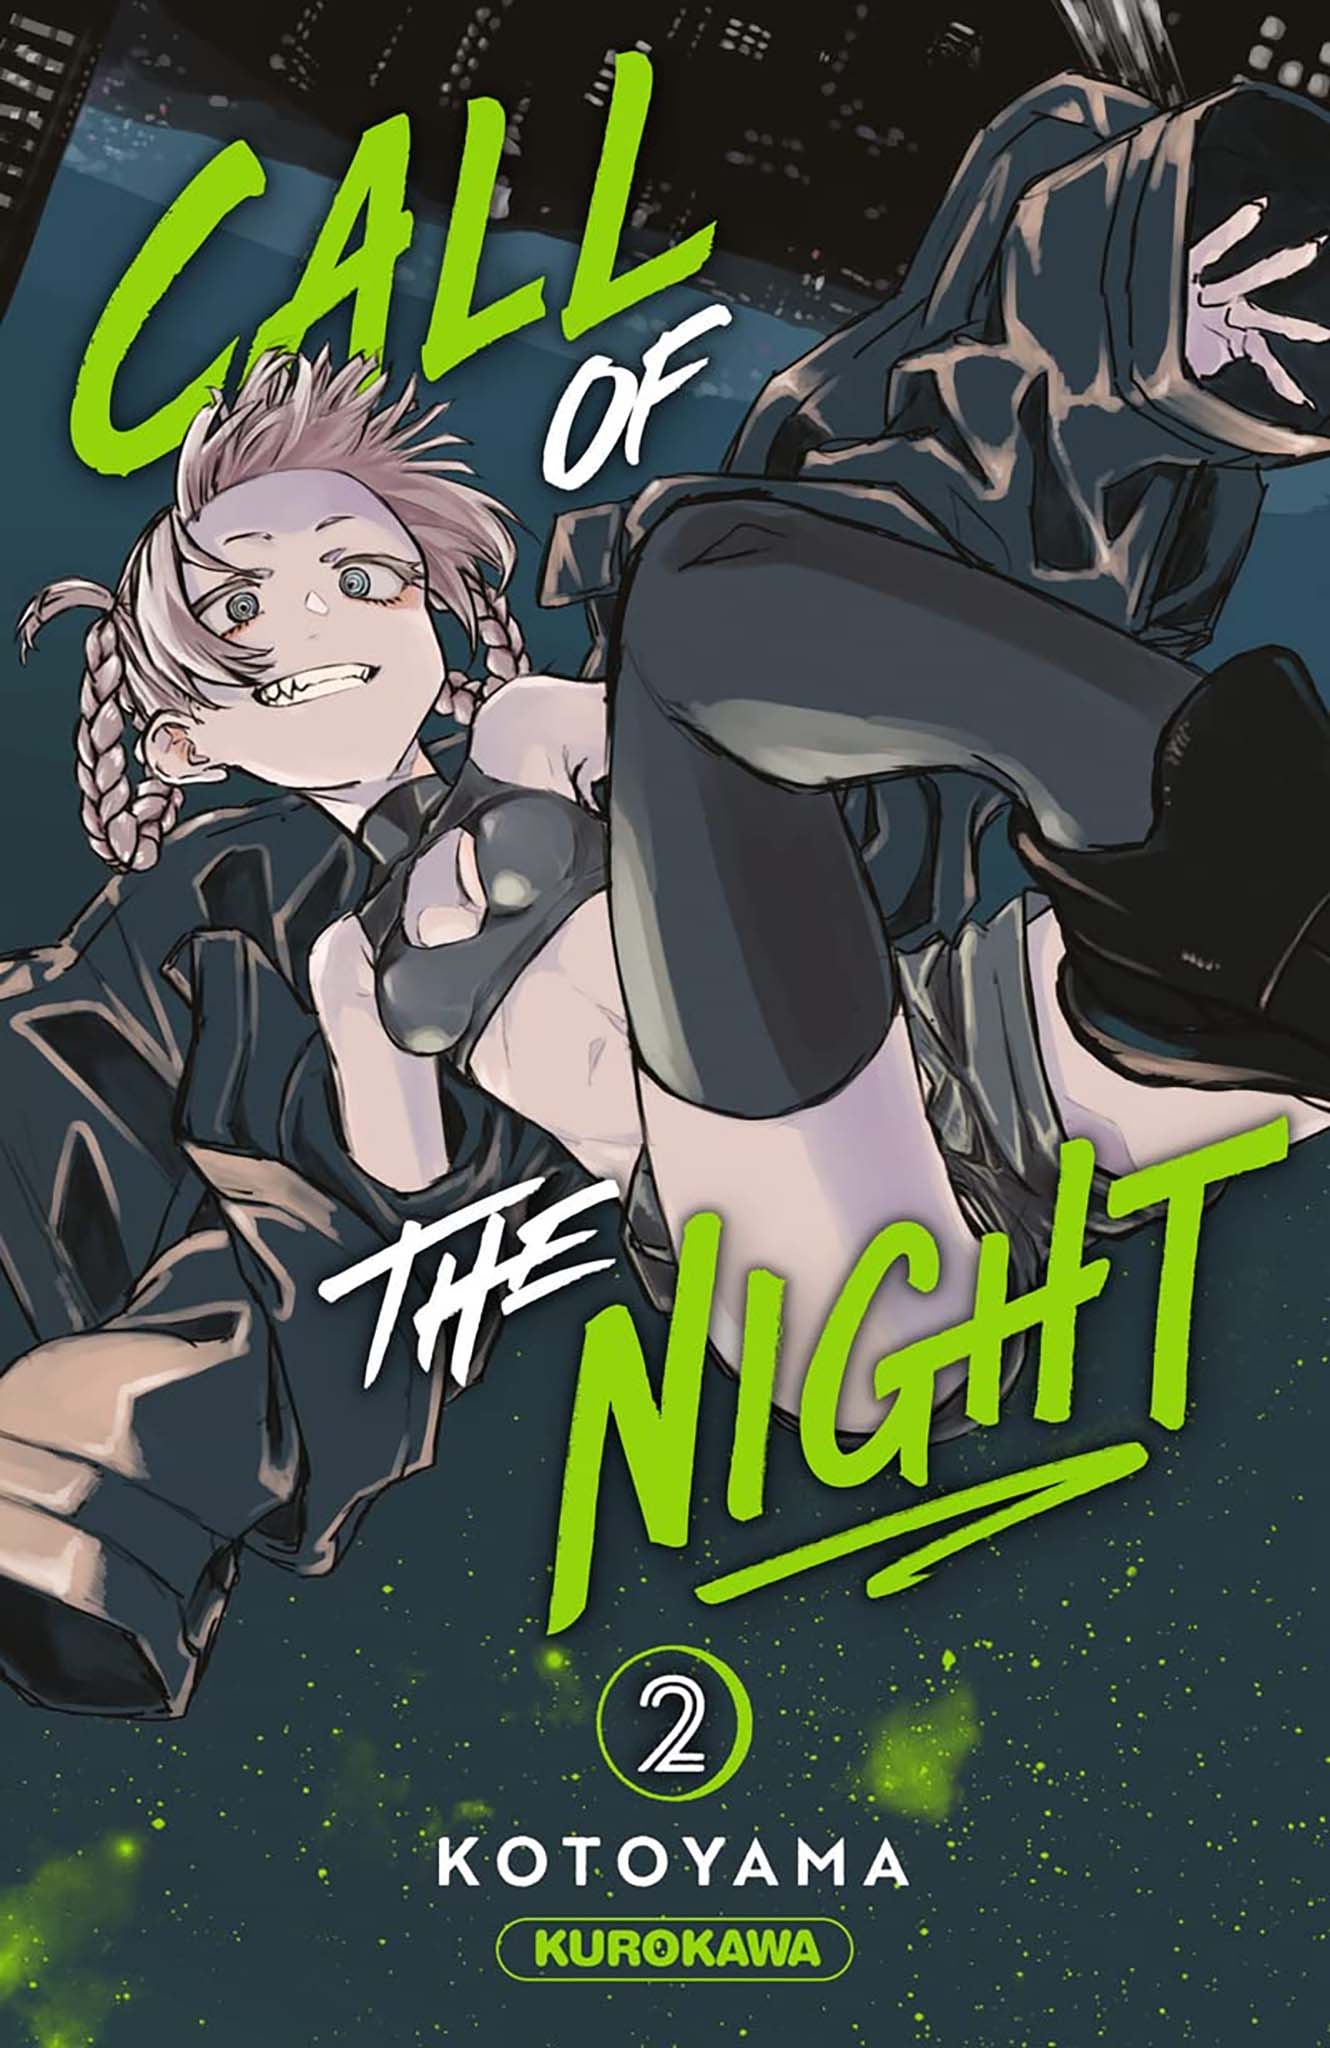 Tome 2 du manga Call of the Night.